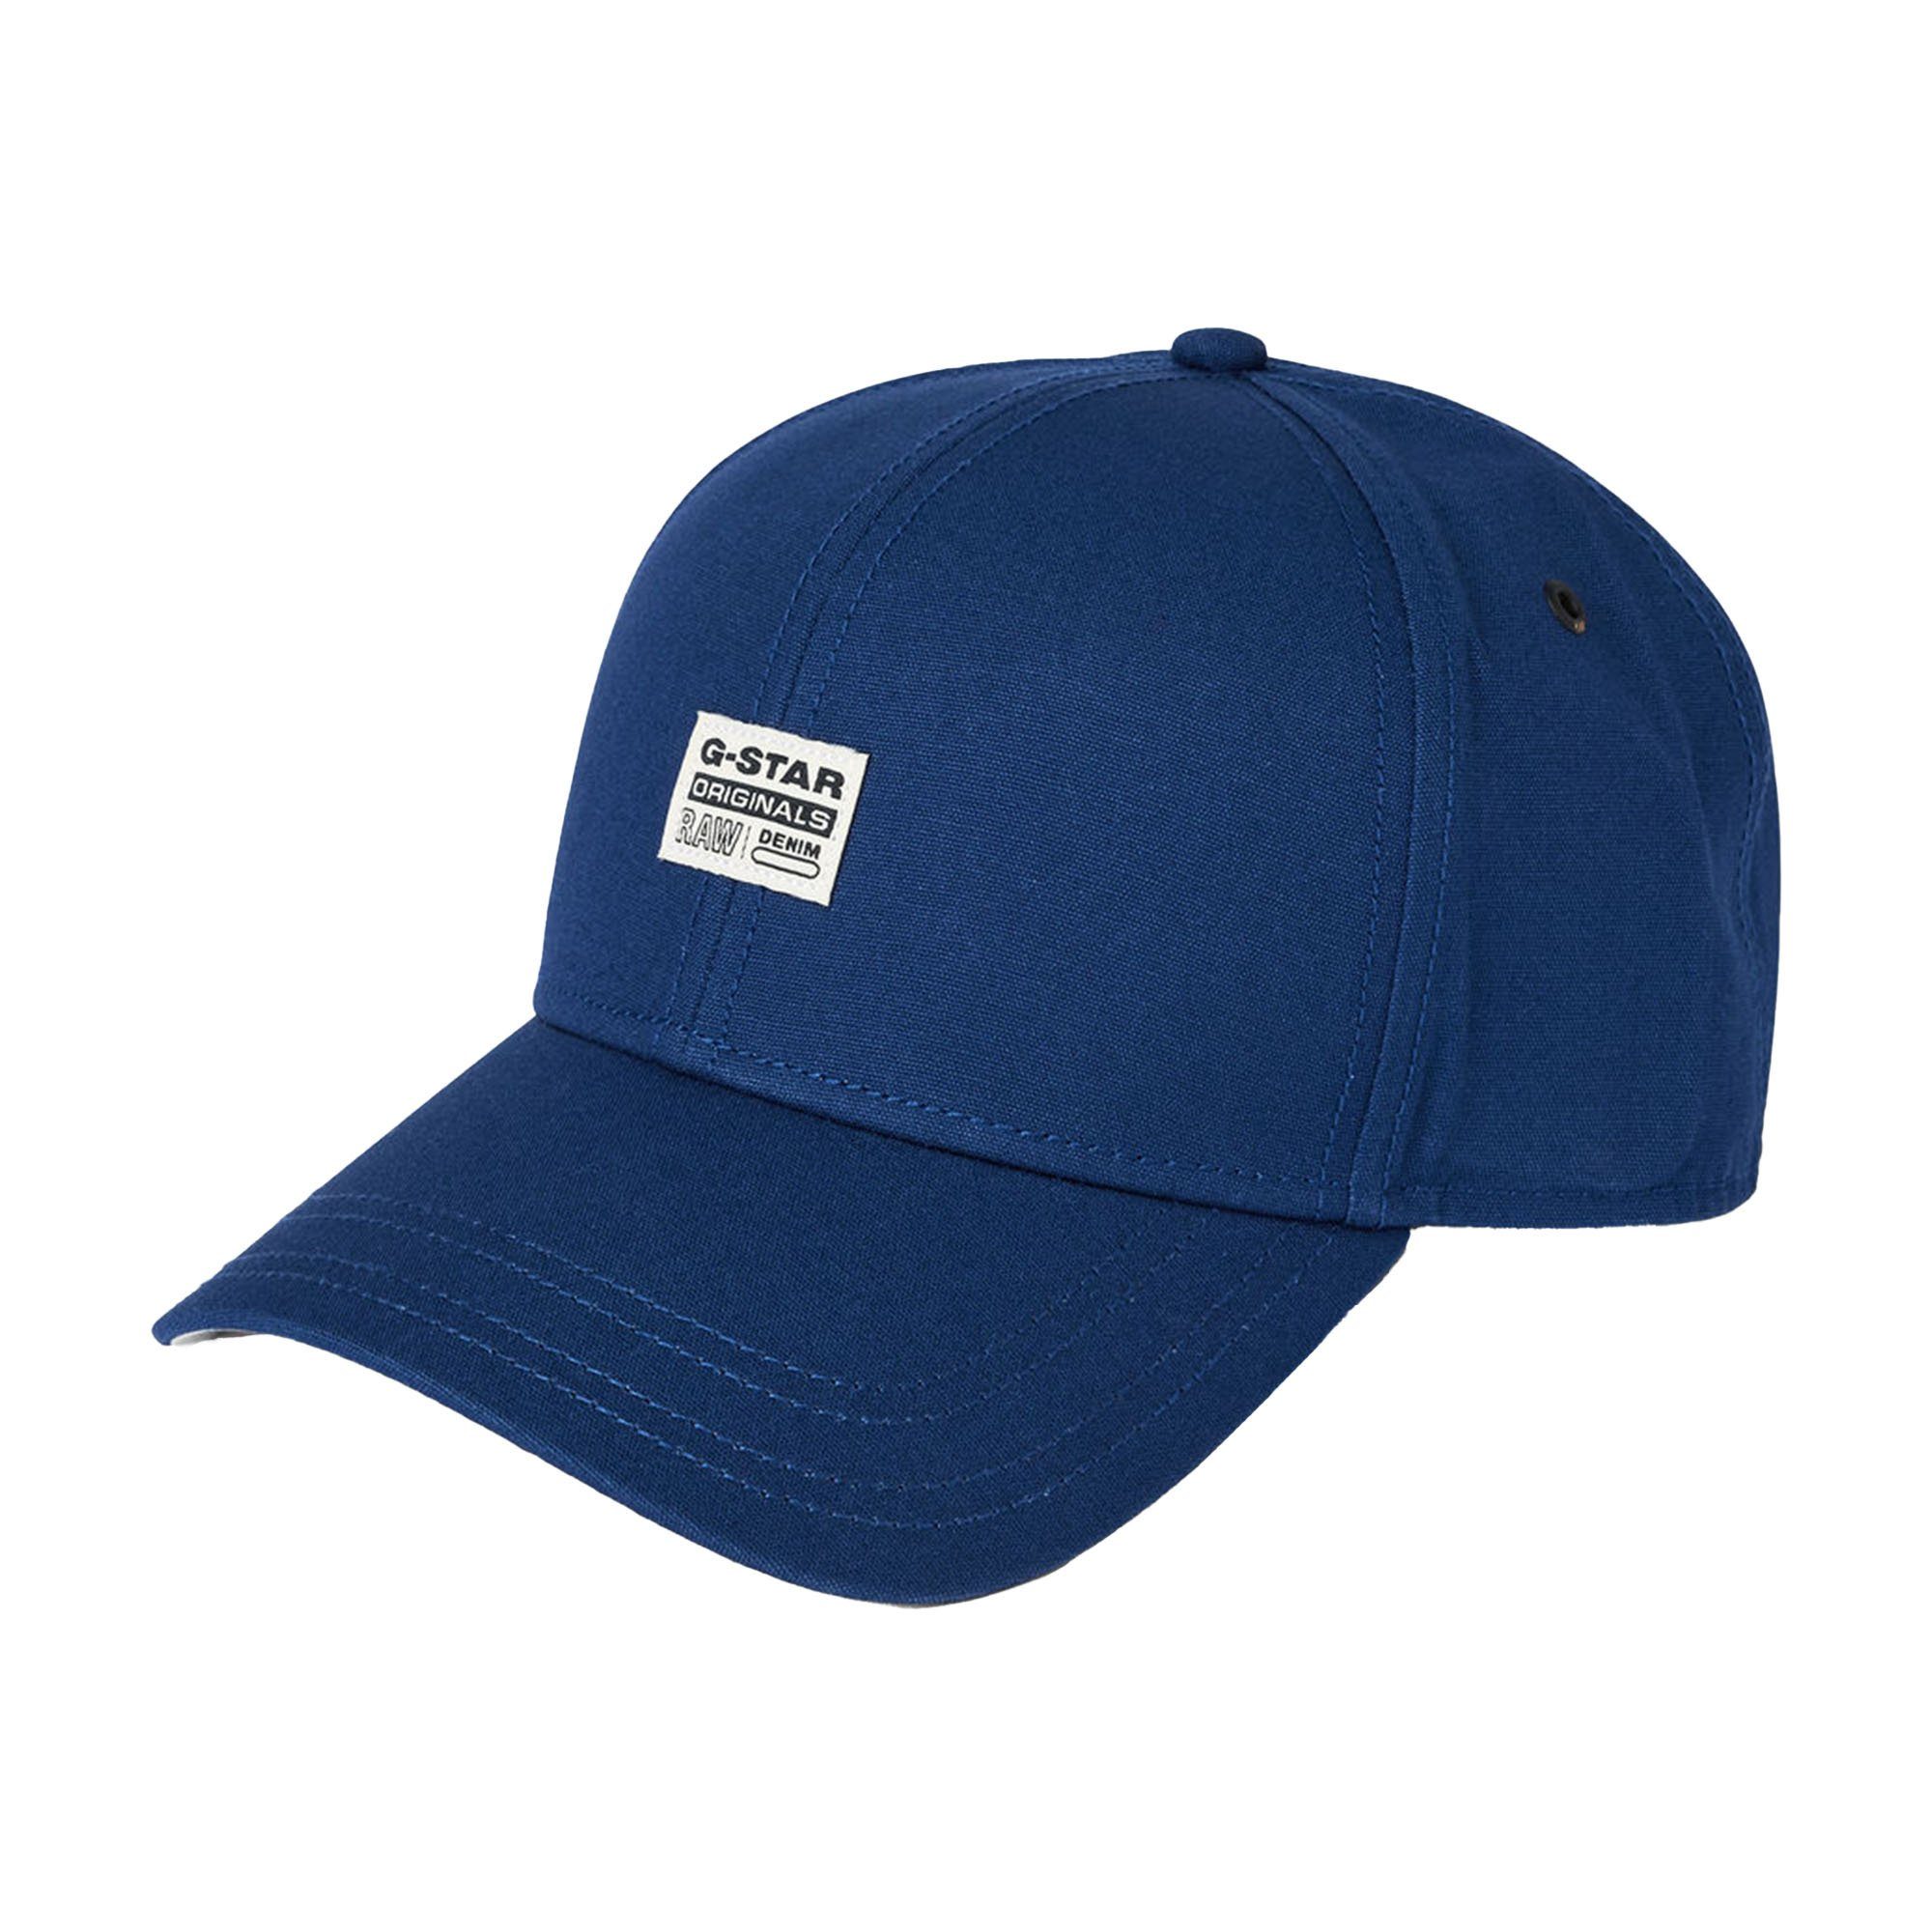 G-Star RAW Baseball Cap Herren Cap - Originals baseball cap, Käppi, Logo Blau